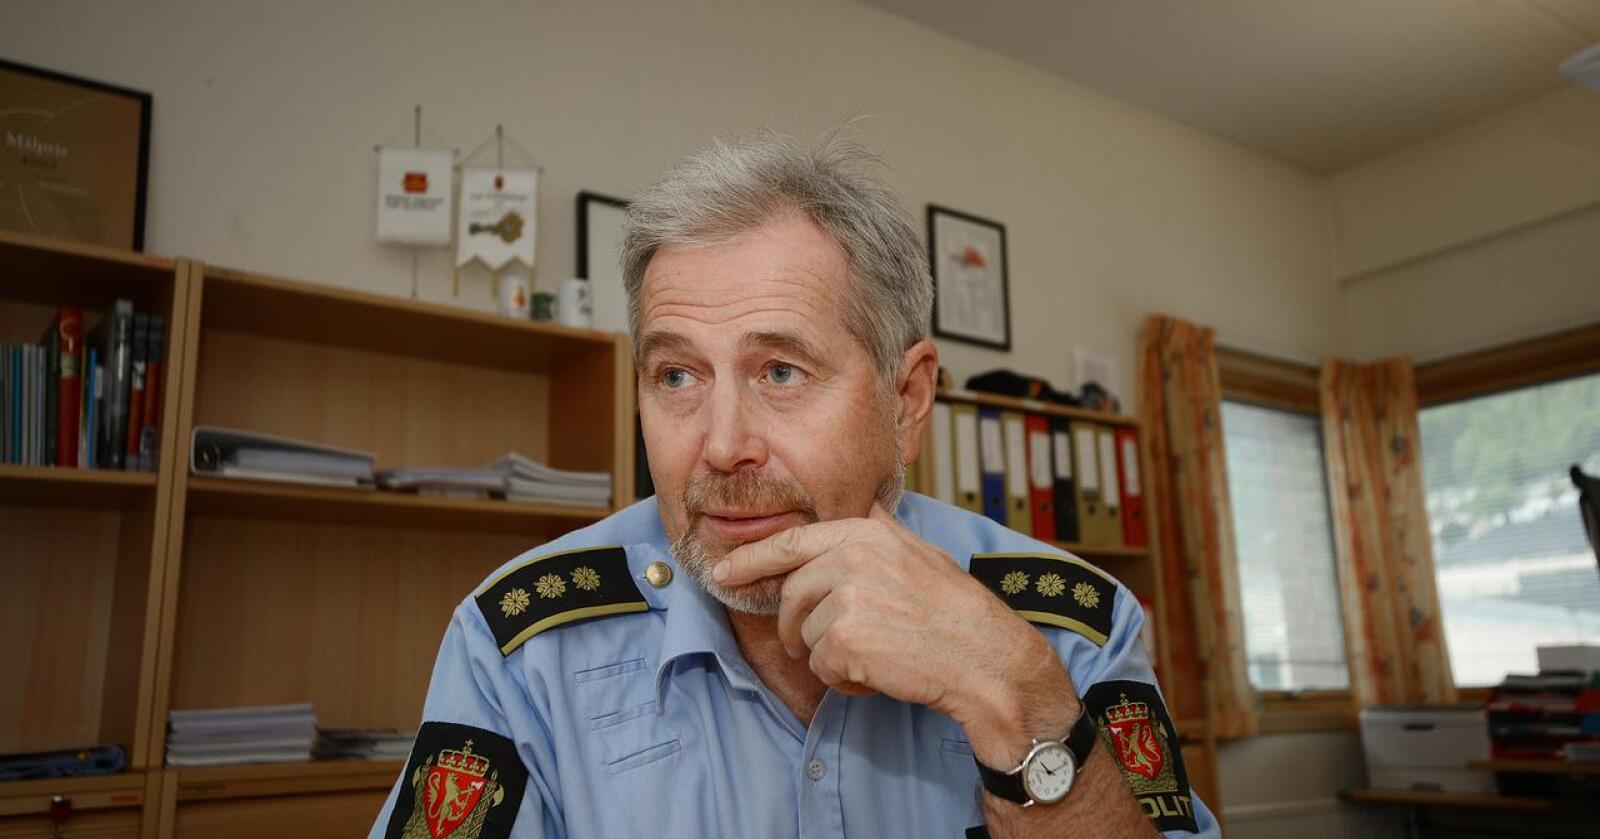 Arne Johannessen (tidligere leder av Politiets Fellesforbund) påtaler politikere som snakker om krise i politiet på Vestlandet. Foto: Siri Juell Rasmussen